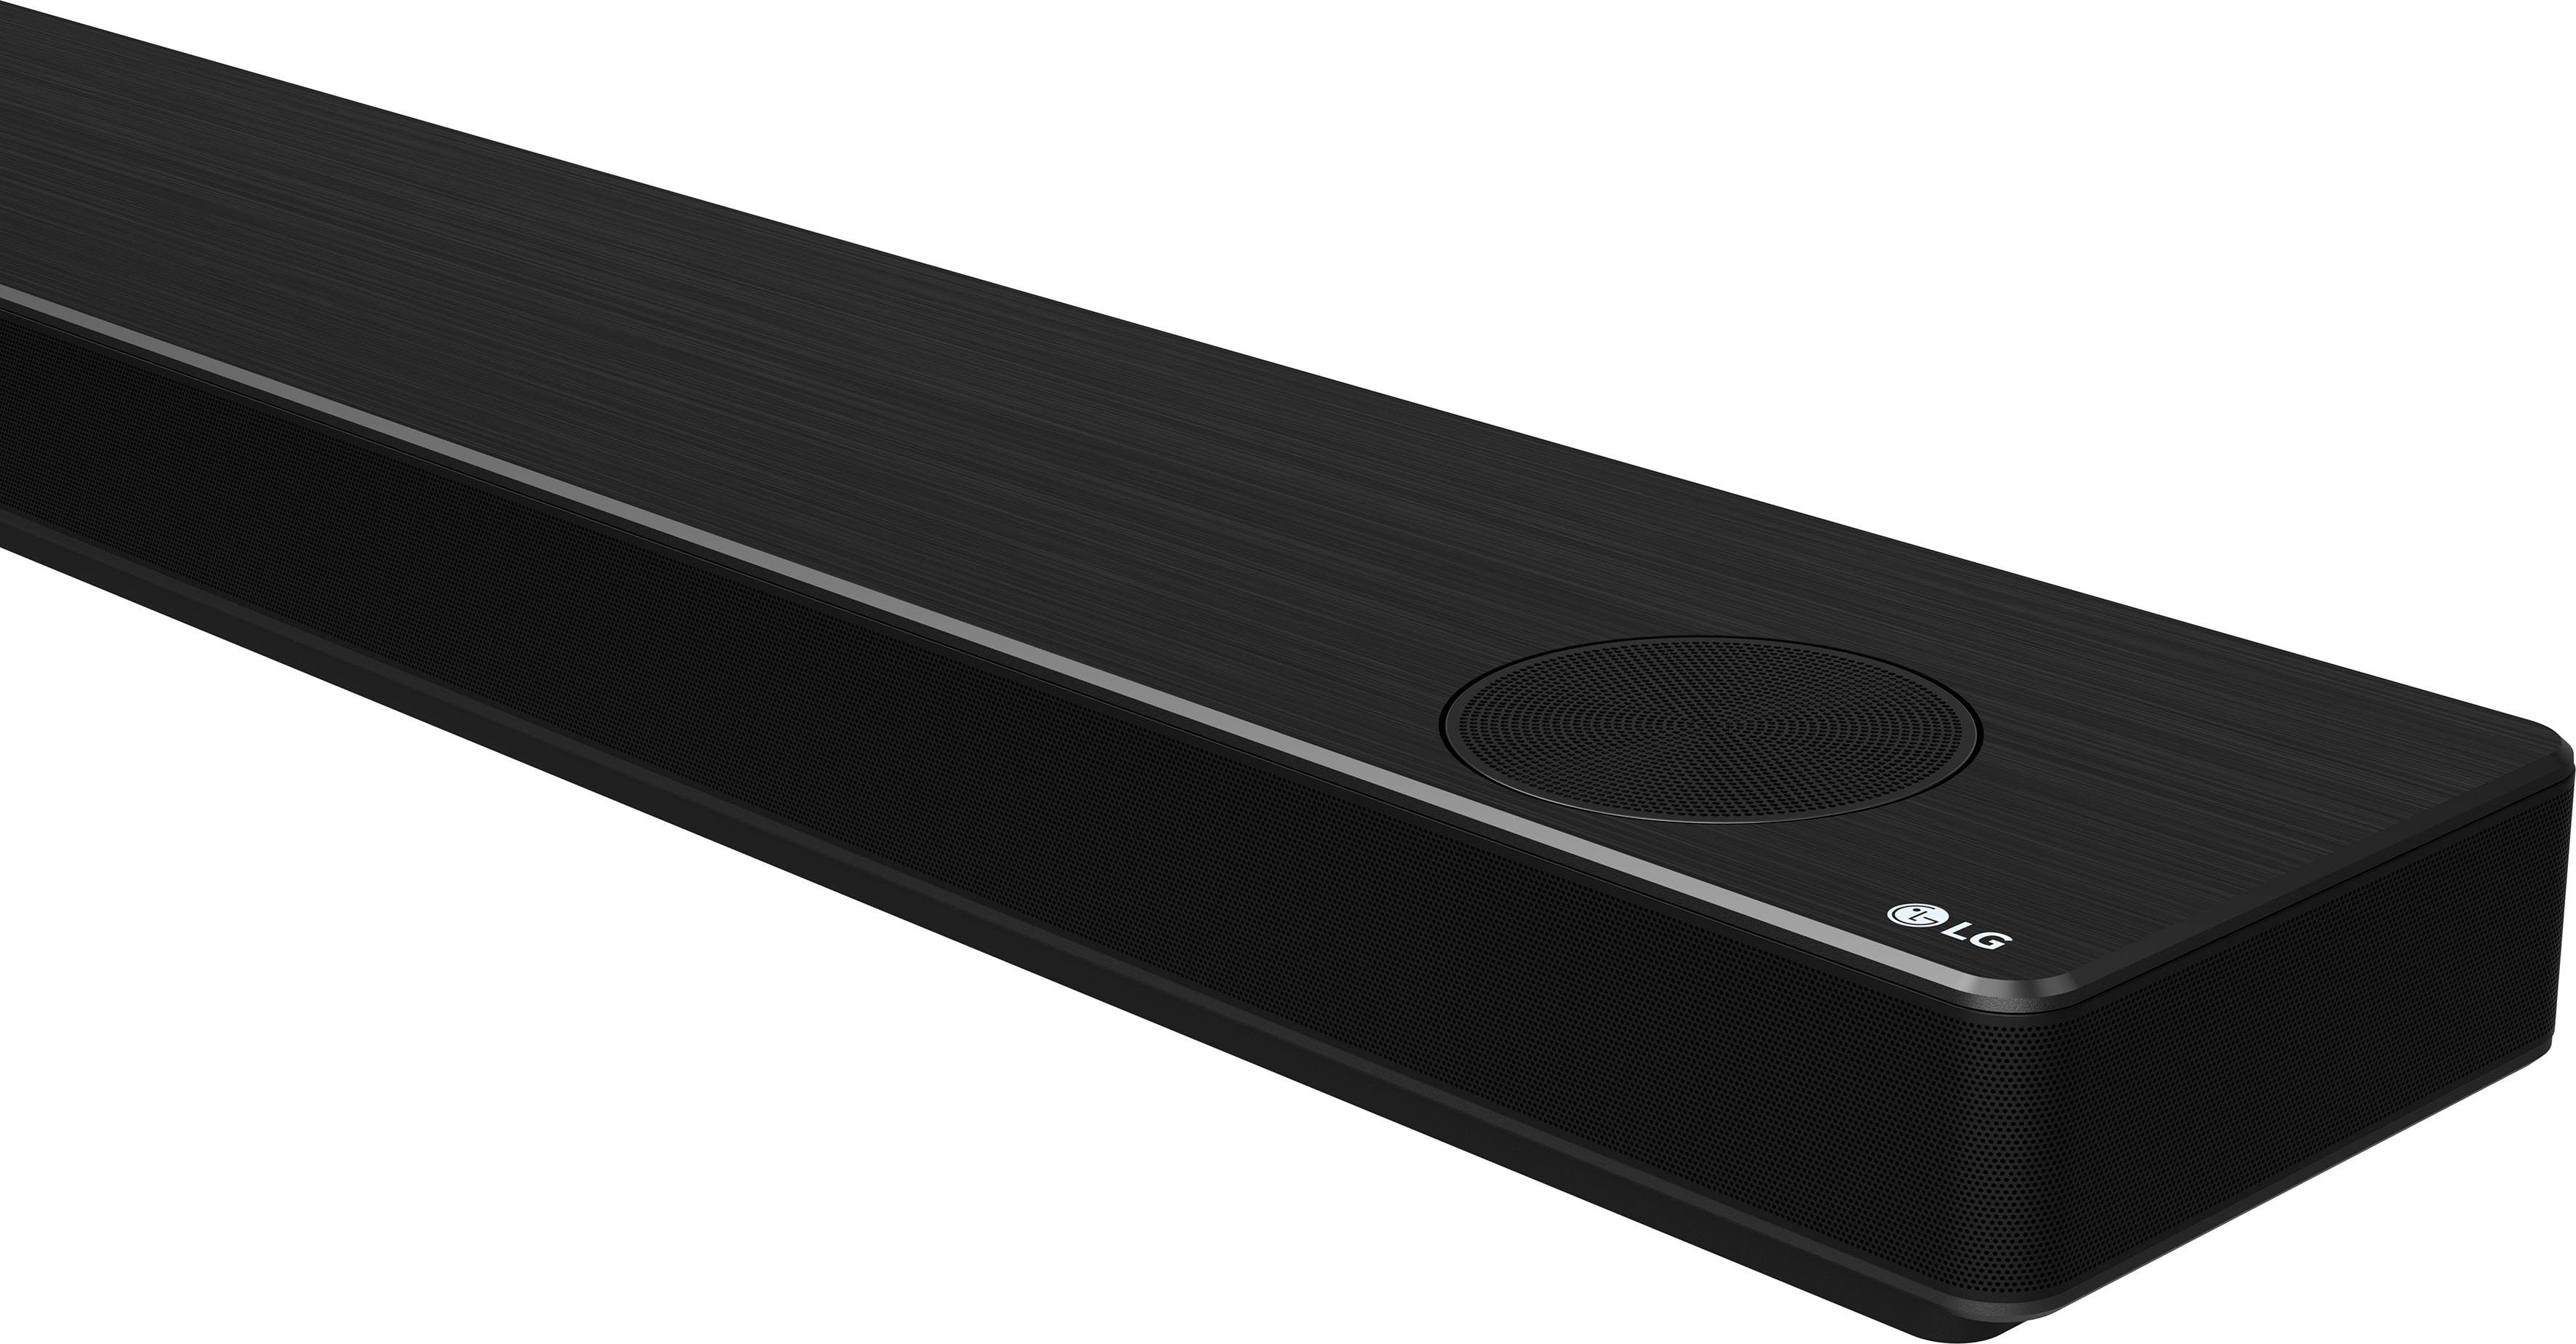 LG DSP11RA 7.1.4 Soundbar 770 W) WLAN, (Bluetooth